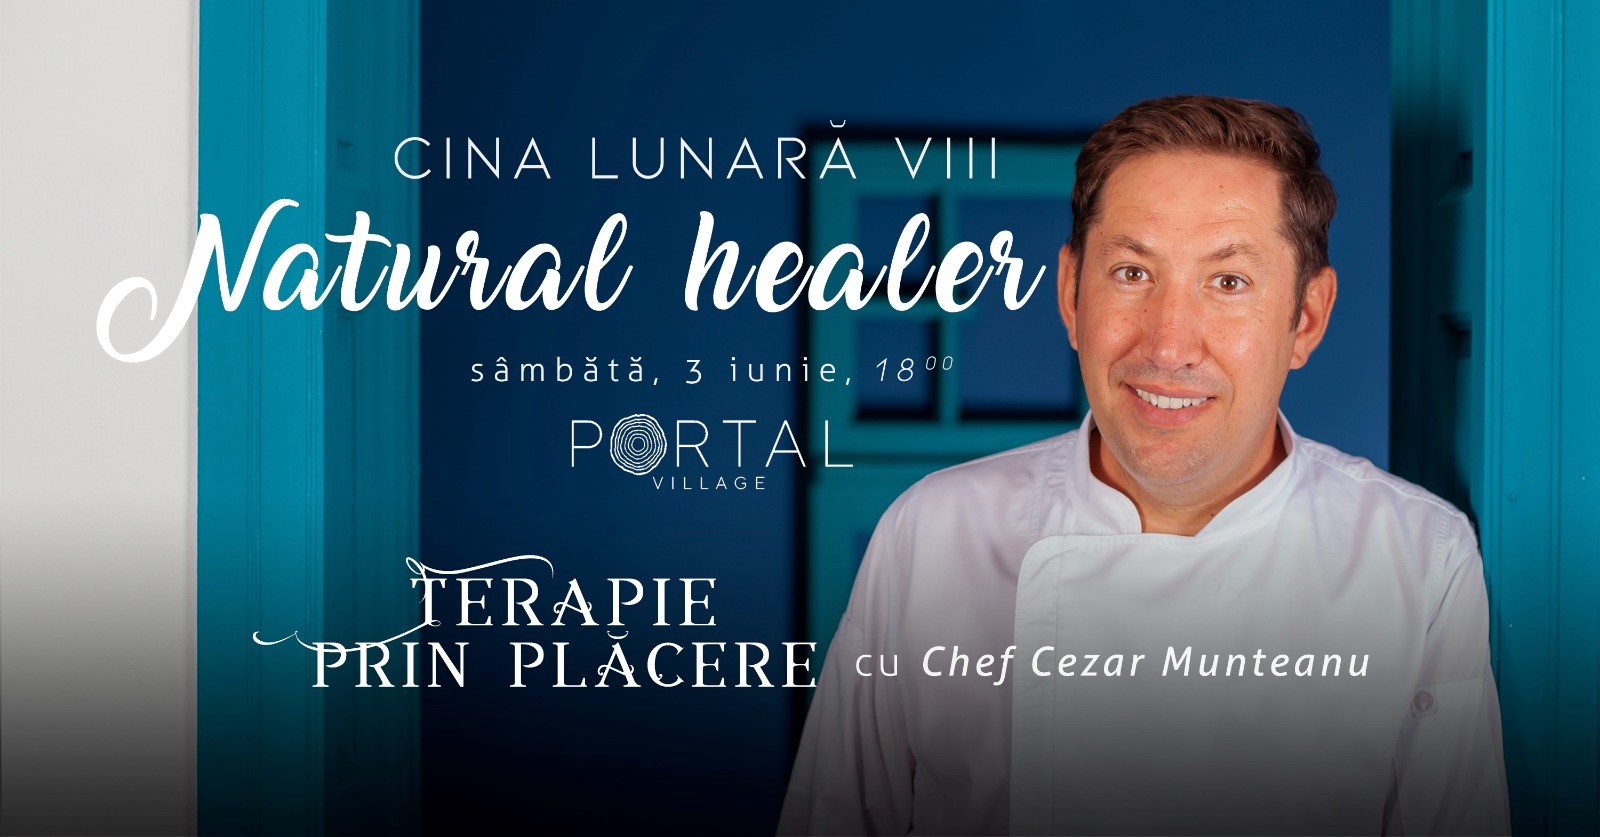 Cina lunară VIII “Natural Healer” cu Chef Cezar Munteanu